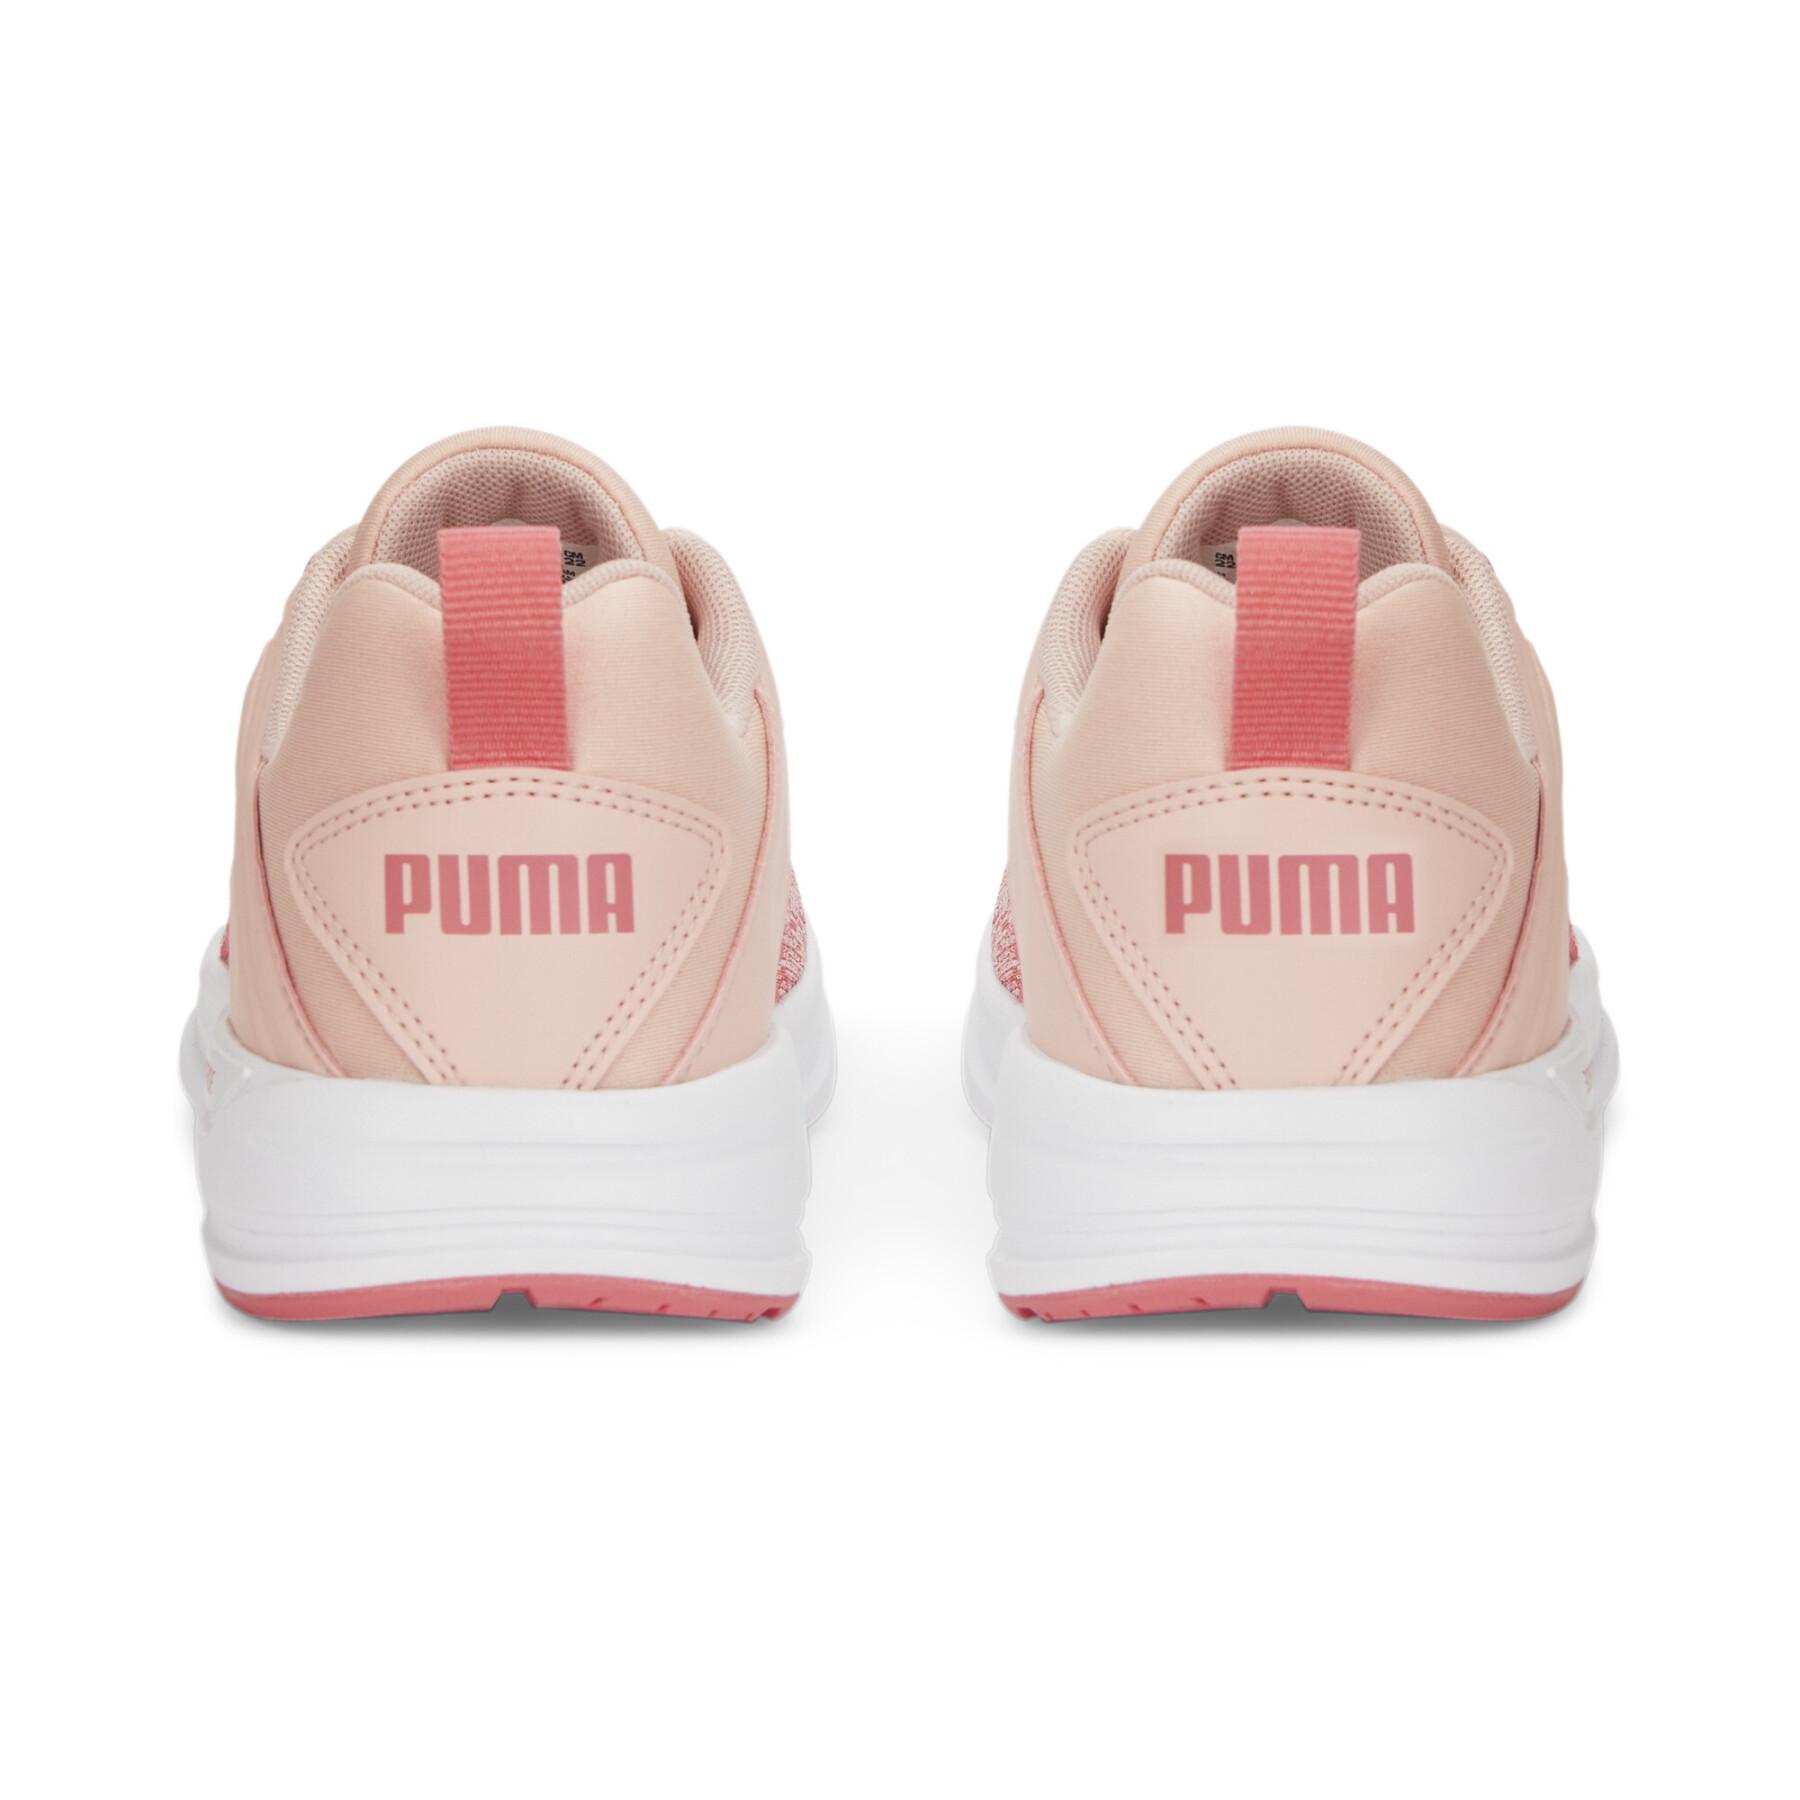  running children's shoes Puma Comet 2 Alt